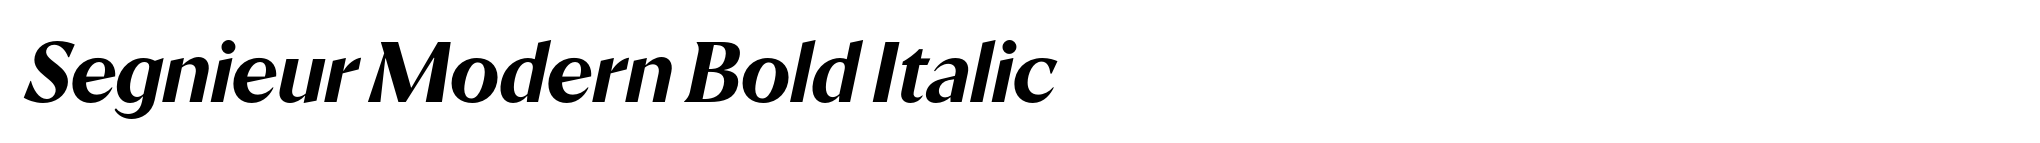 Segnieur Modern Bold Italic image